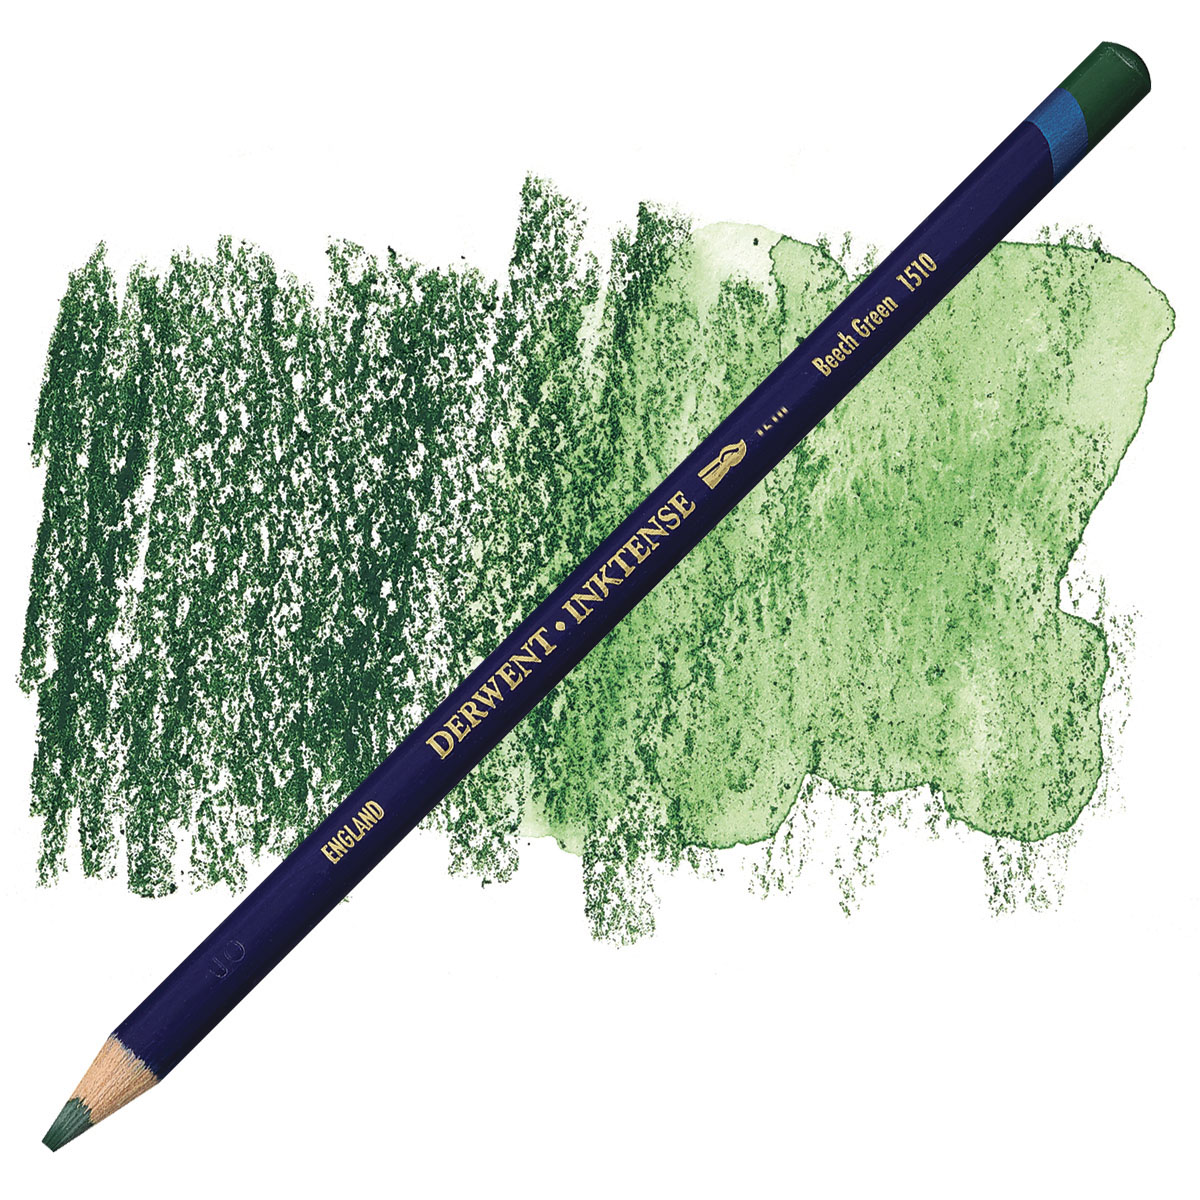 Derwent® Inktense Watercolor Pencil Set (12-pc) – The Yard Art Supplies